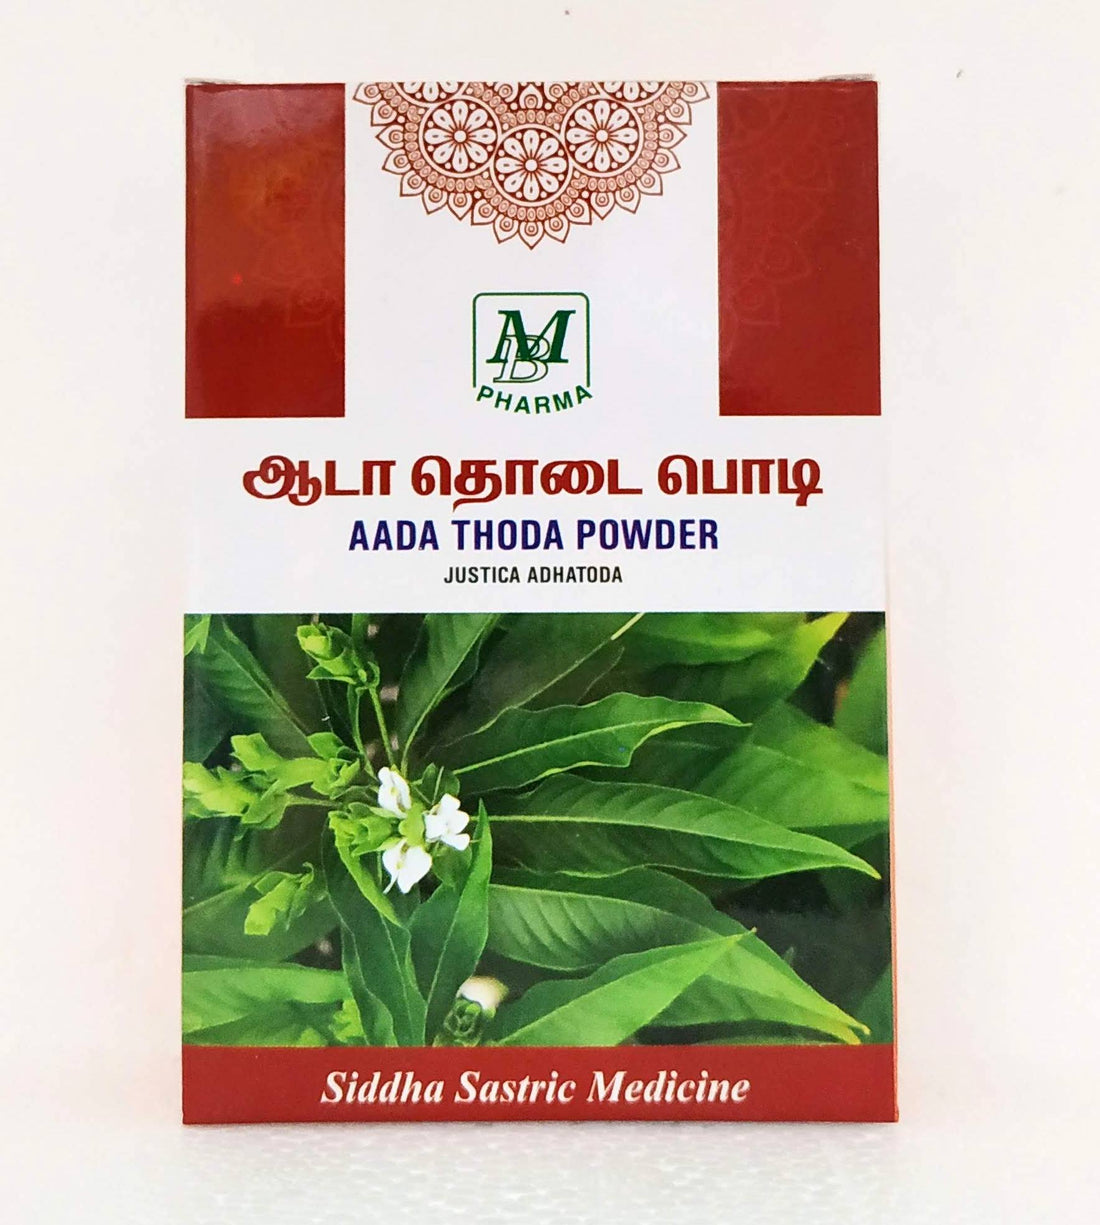 Shop Adathodai Powder 50gm at price 40.00 from MB Pharma Online - Ayush Care